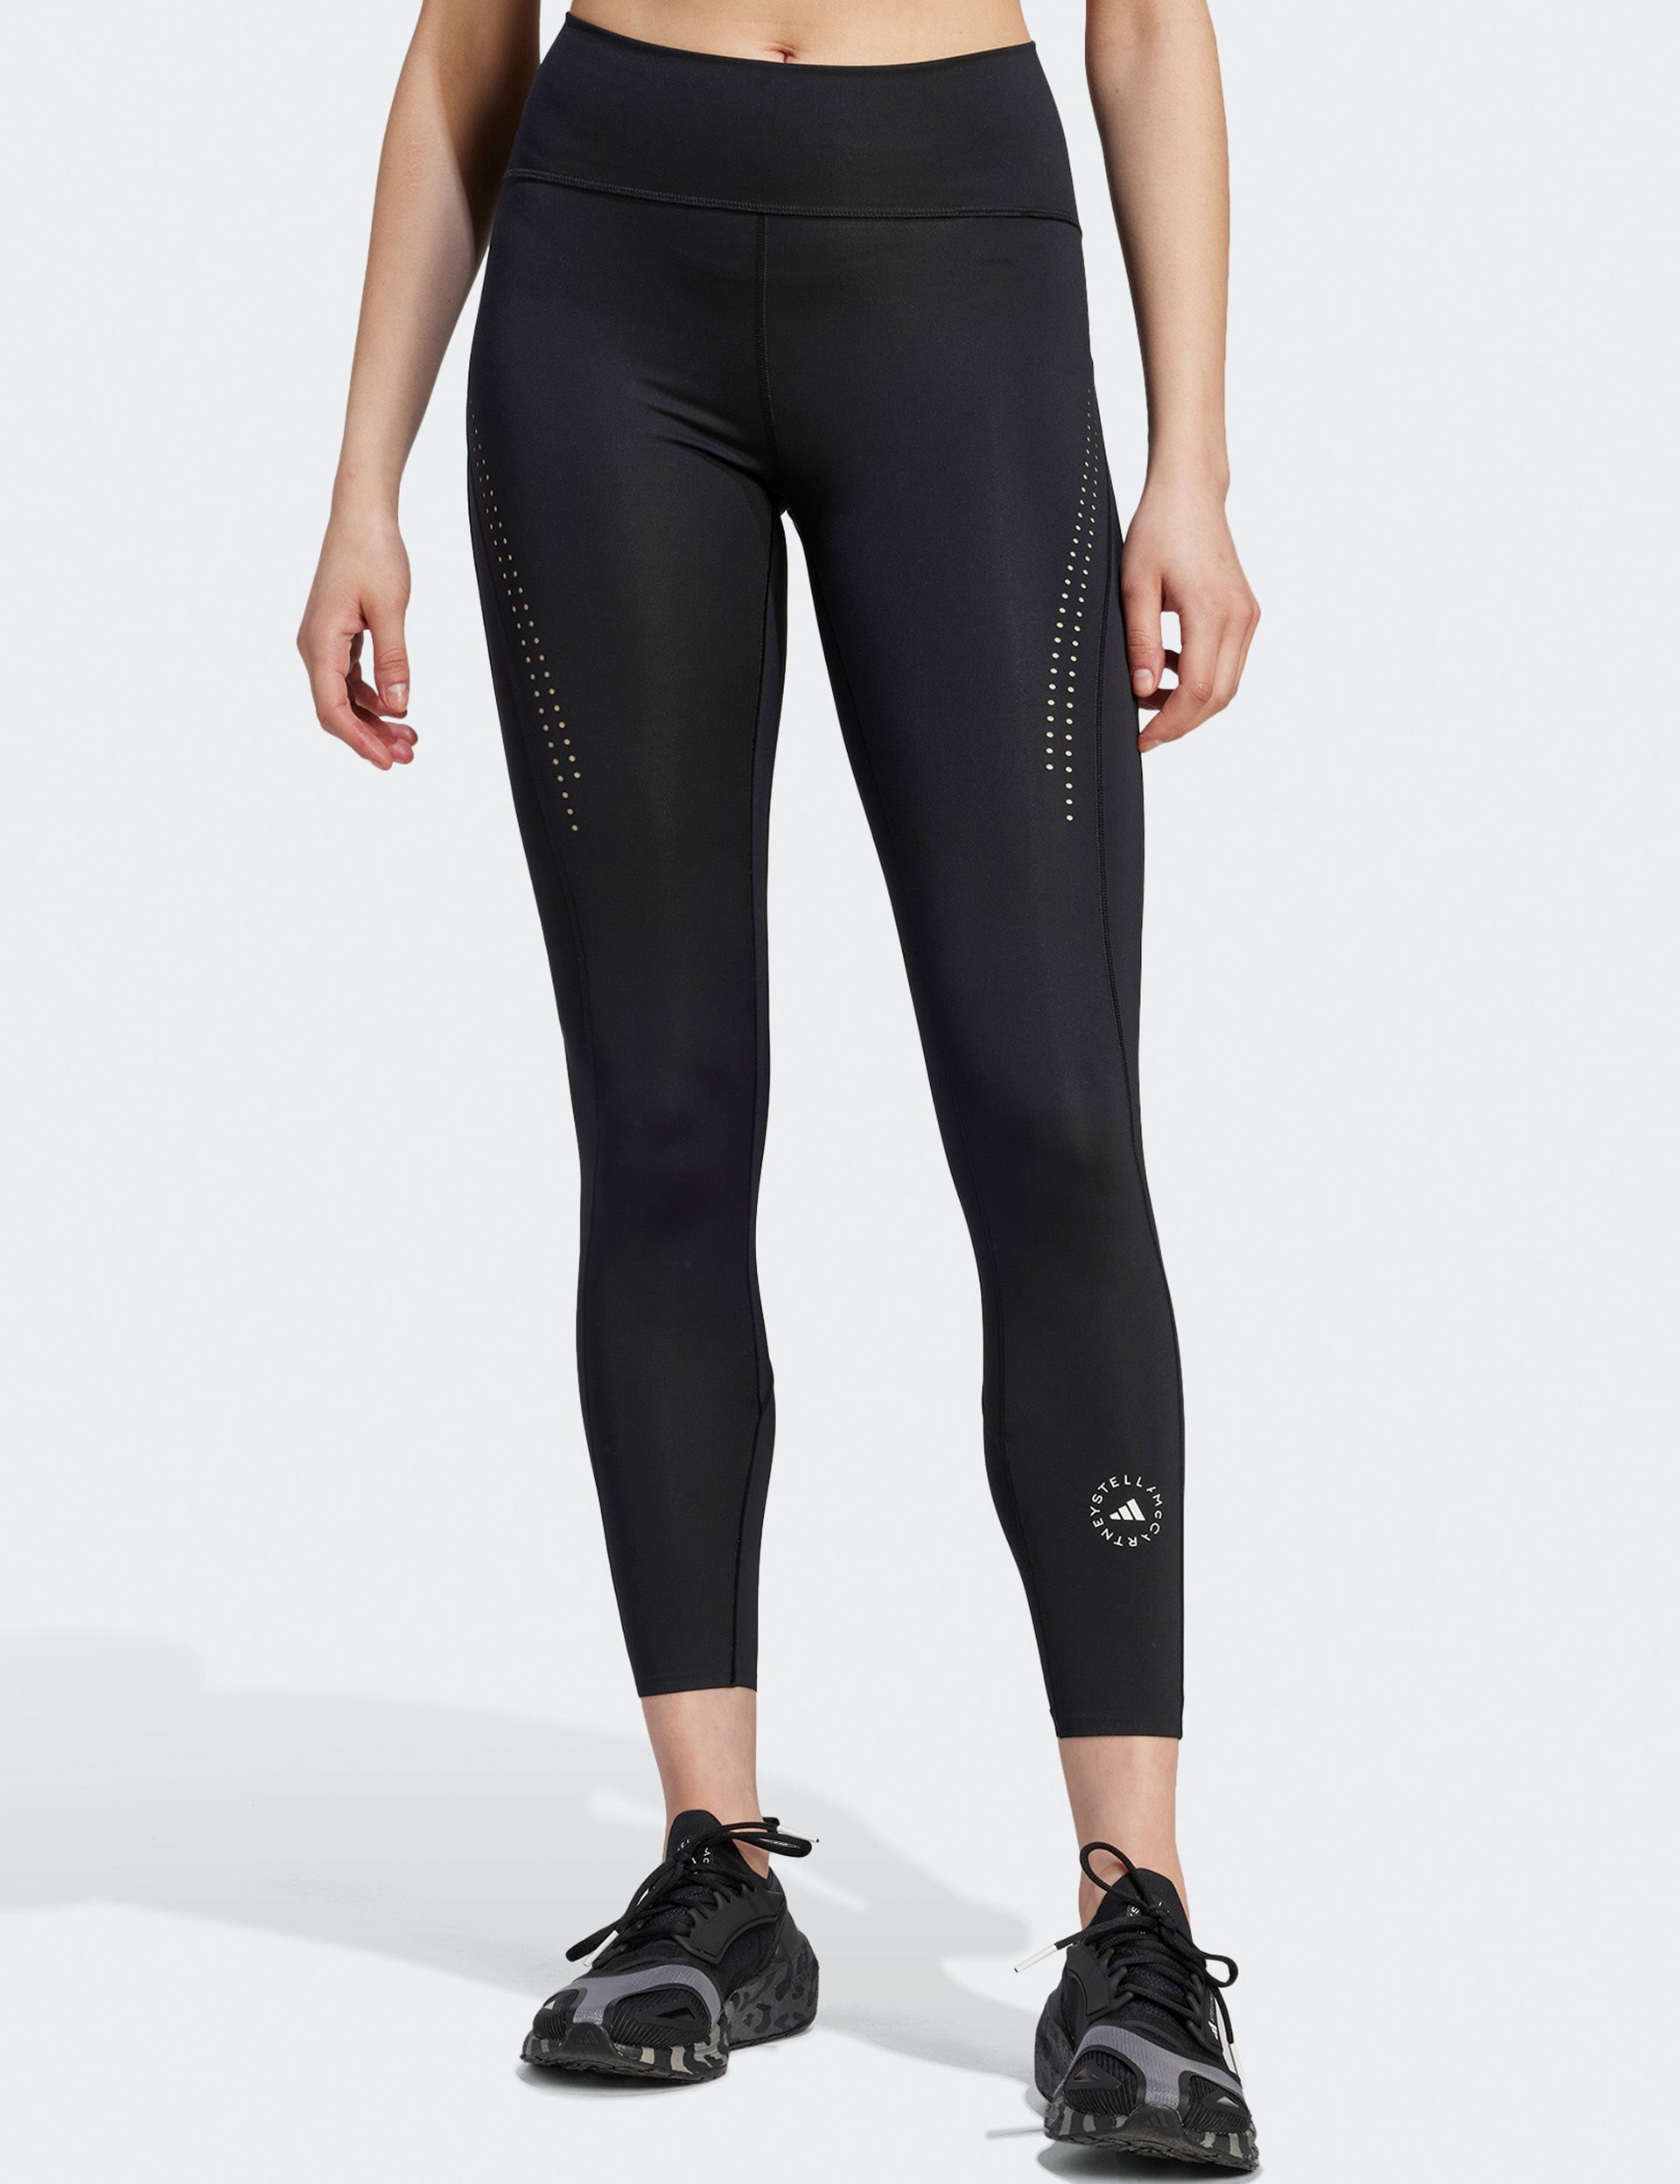 Adidas Women's Leggings Uk 12 Black Polyester with Elastane